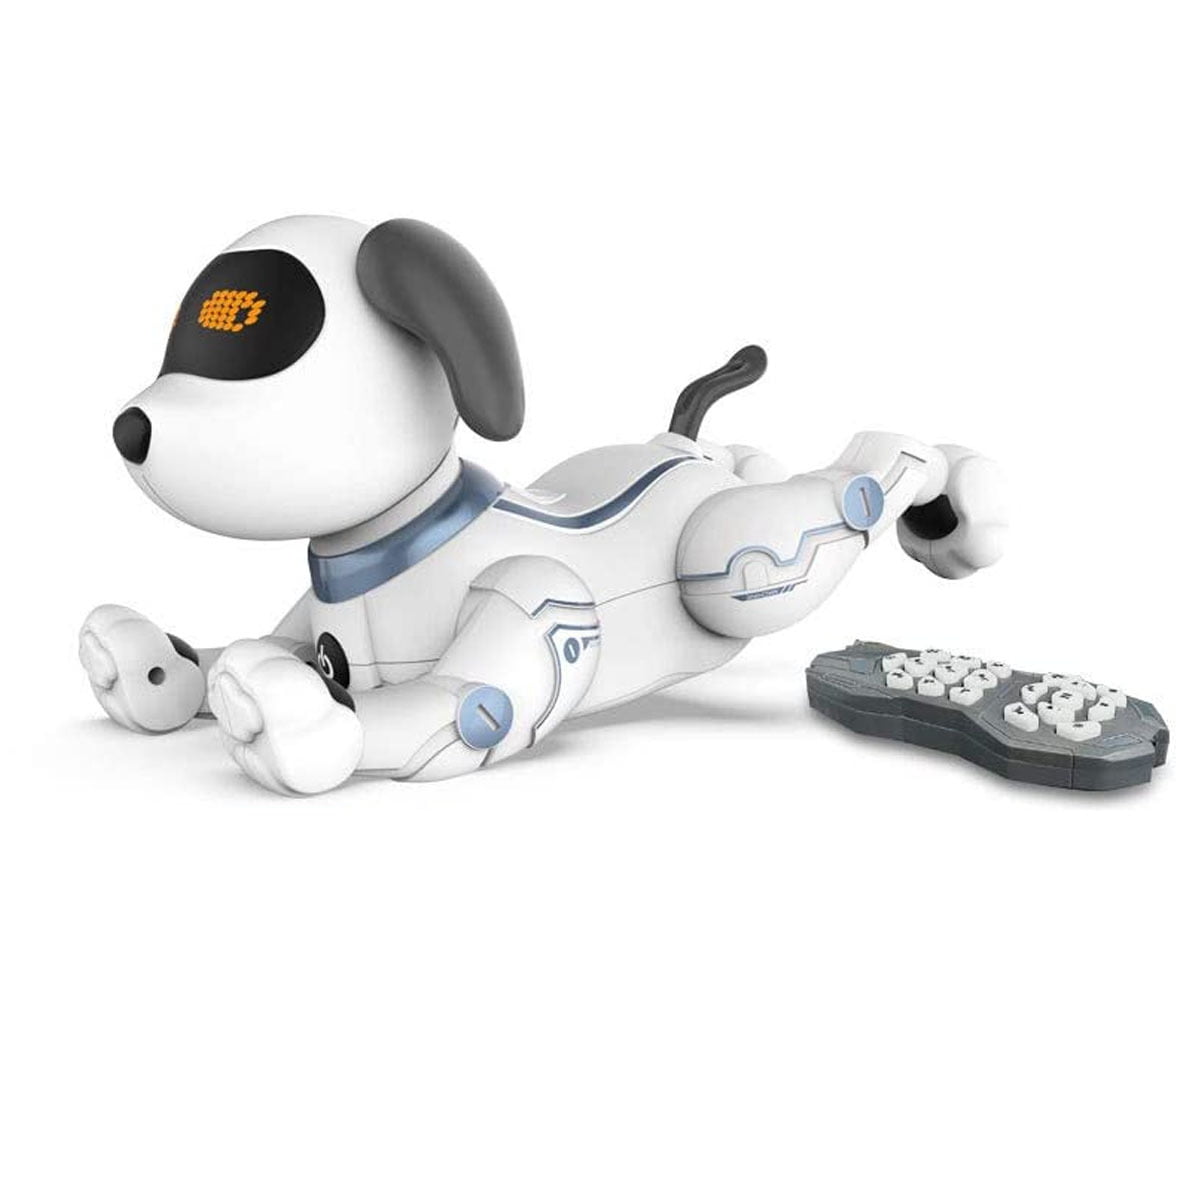 RC Wise pet Intelligent Robot Smart Voice Control Dog Cat Kids Toys Smart Gift 